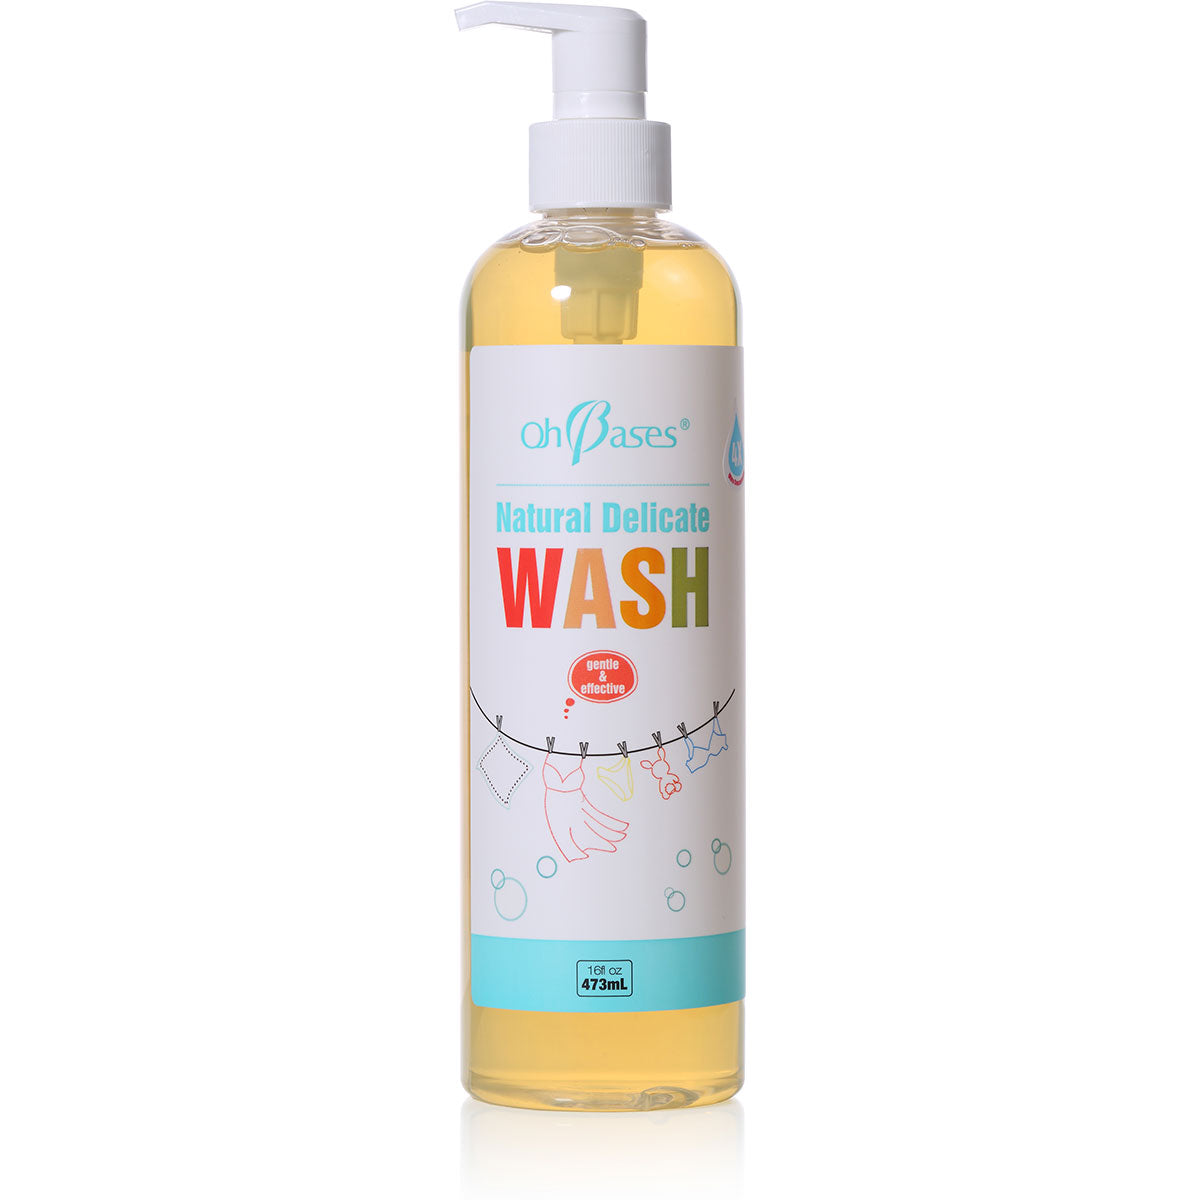 Natural Delicate Wash - OhBases